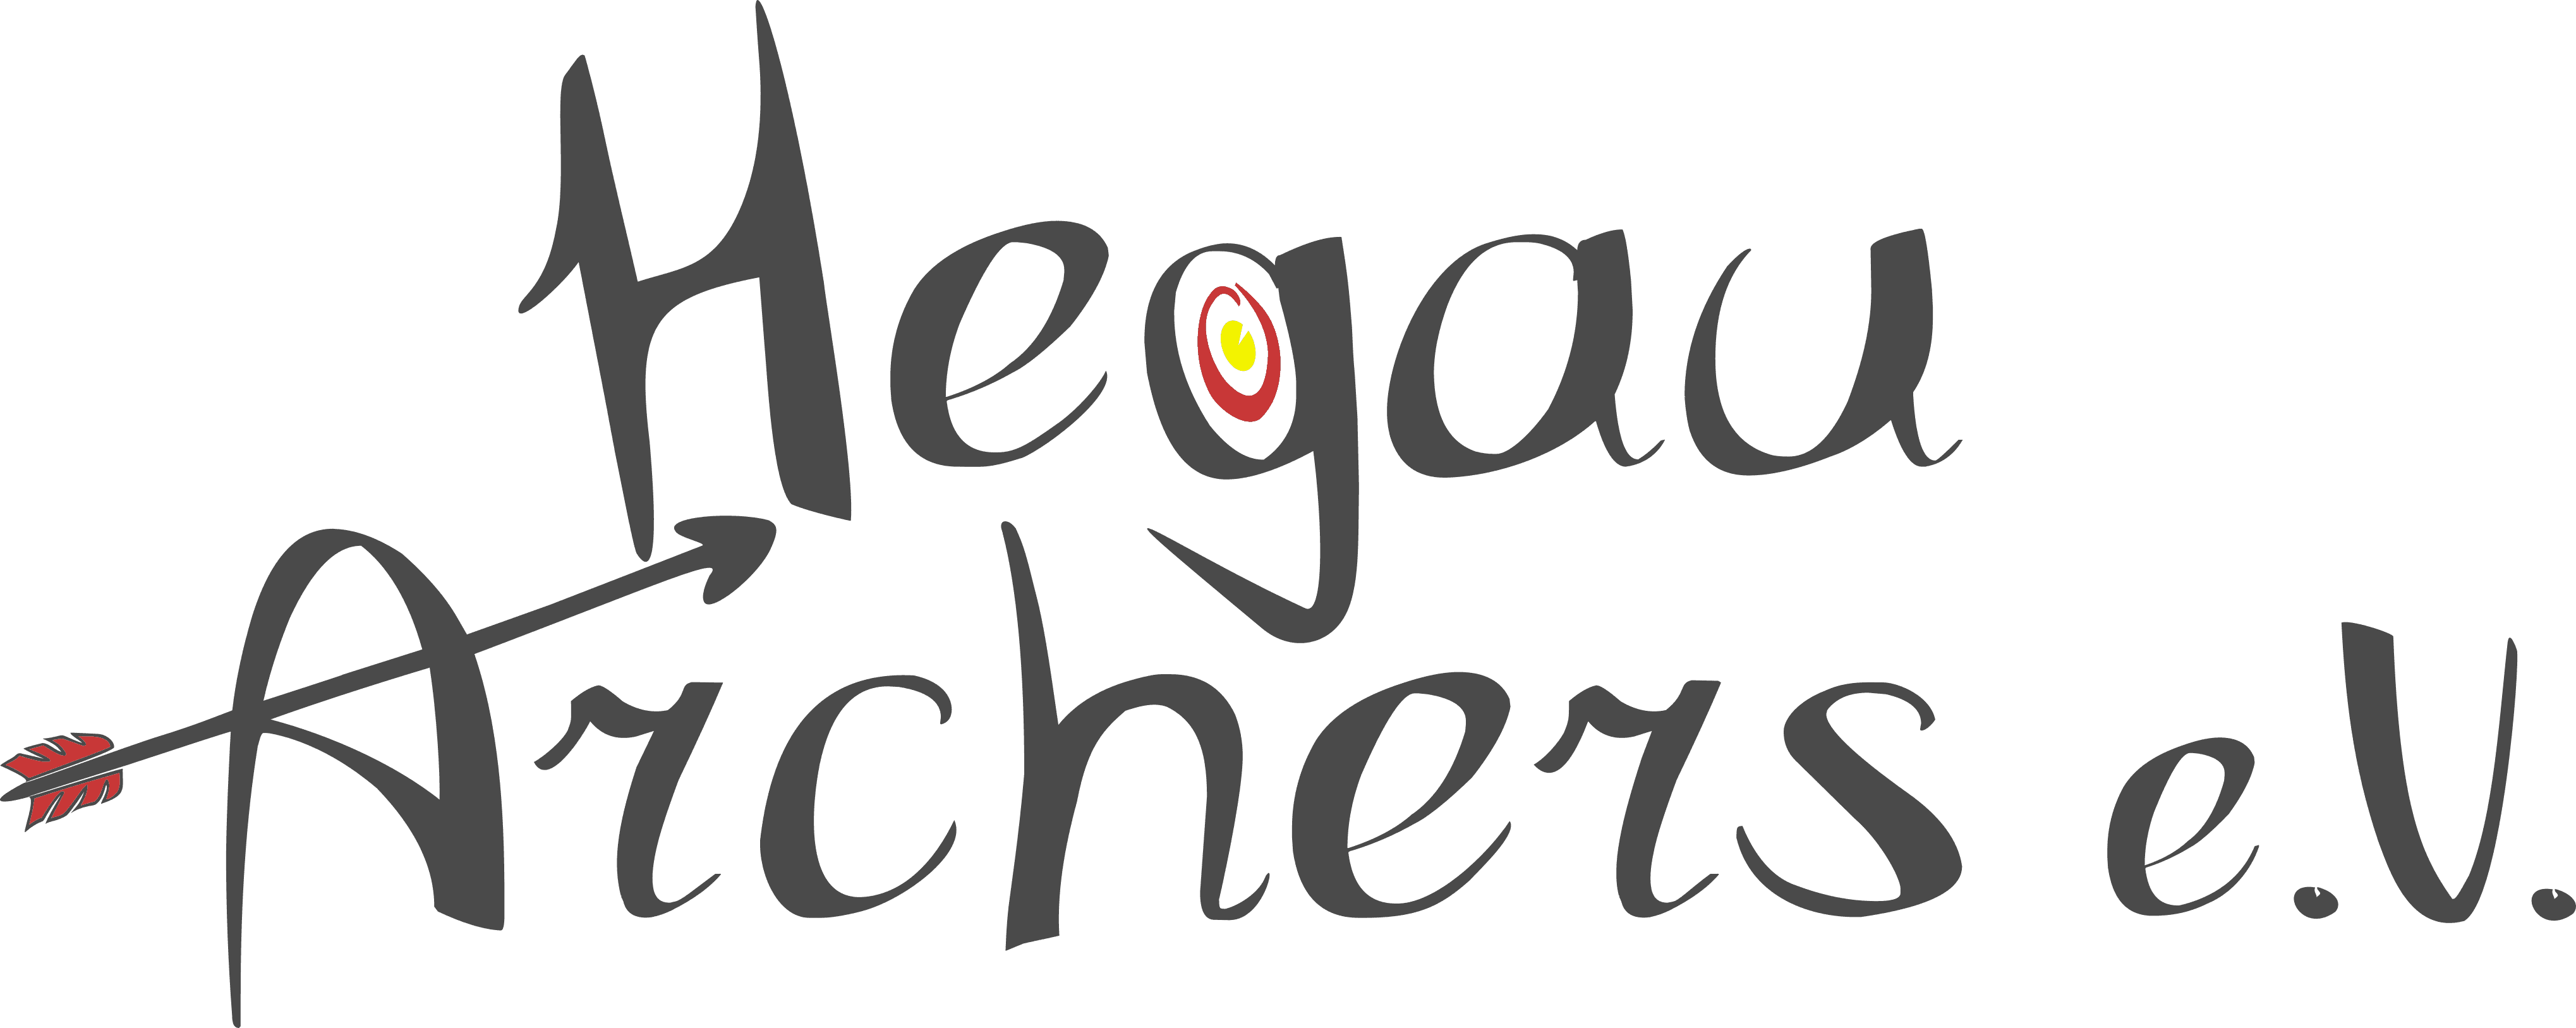 Hegau Archers e.V. Logo